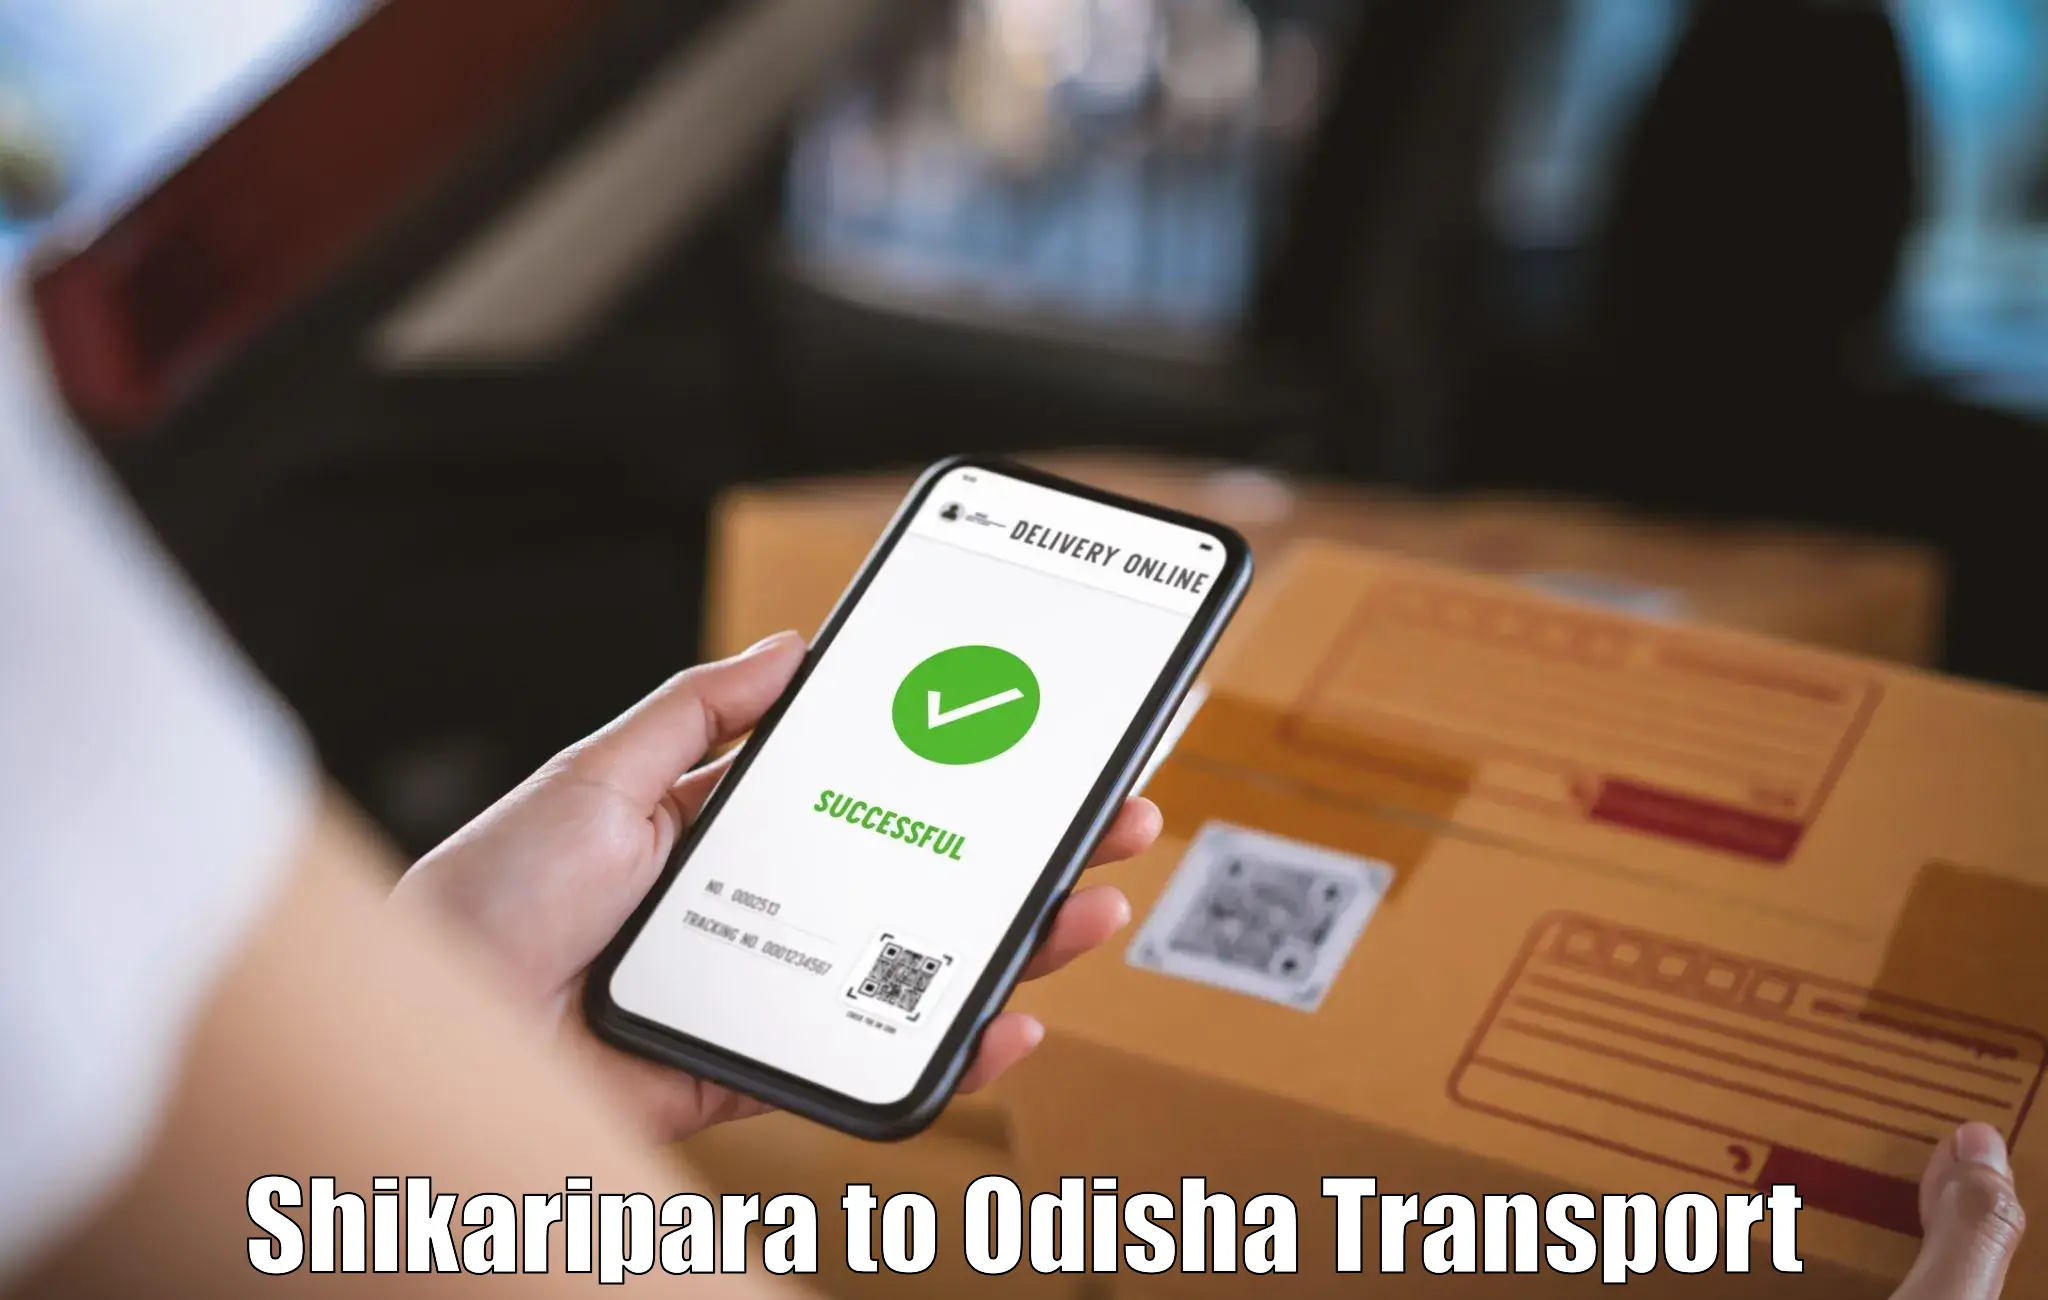 Delivery service Shikaripara to Morada